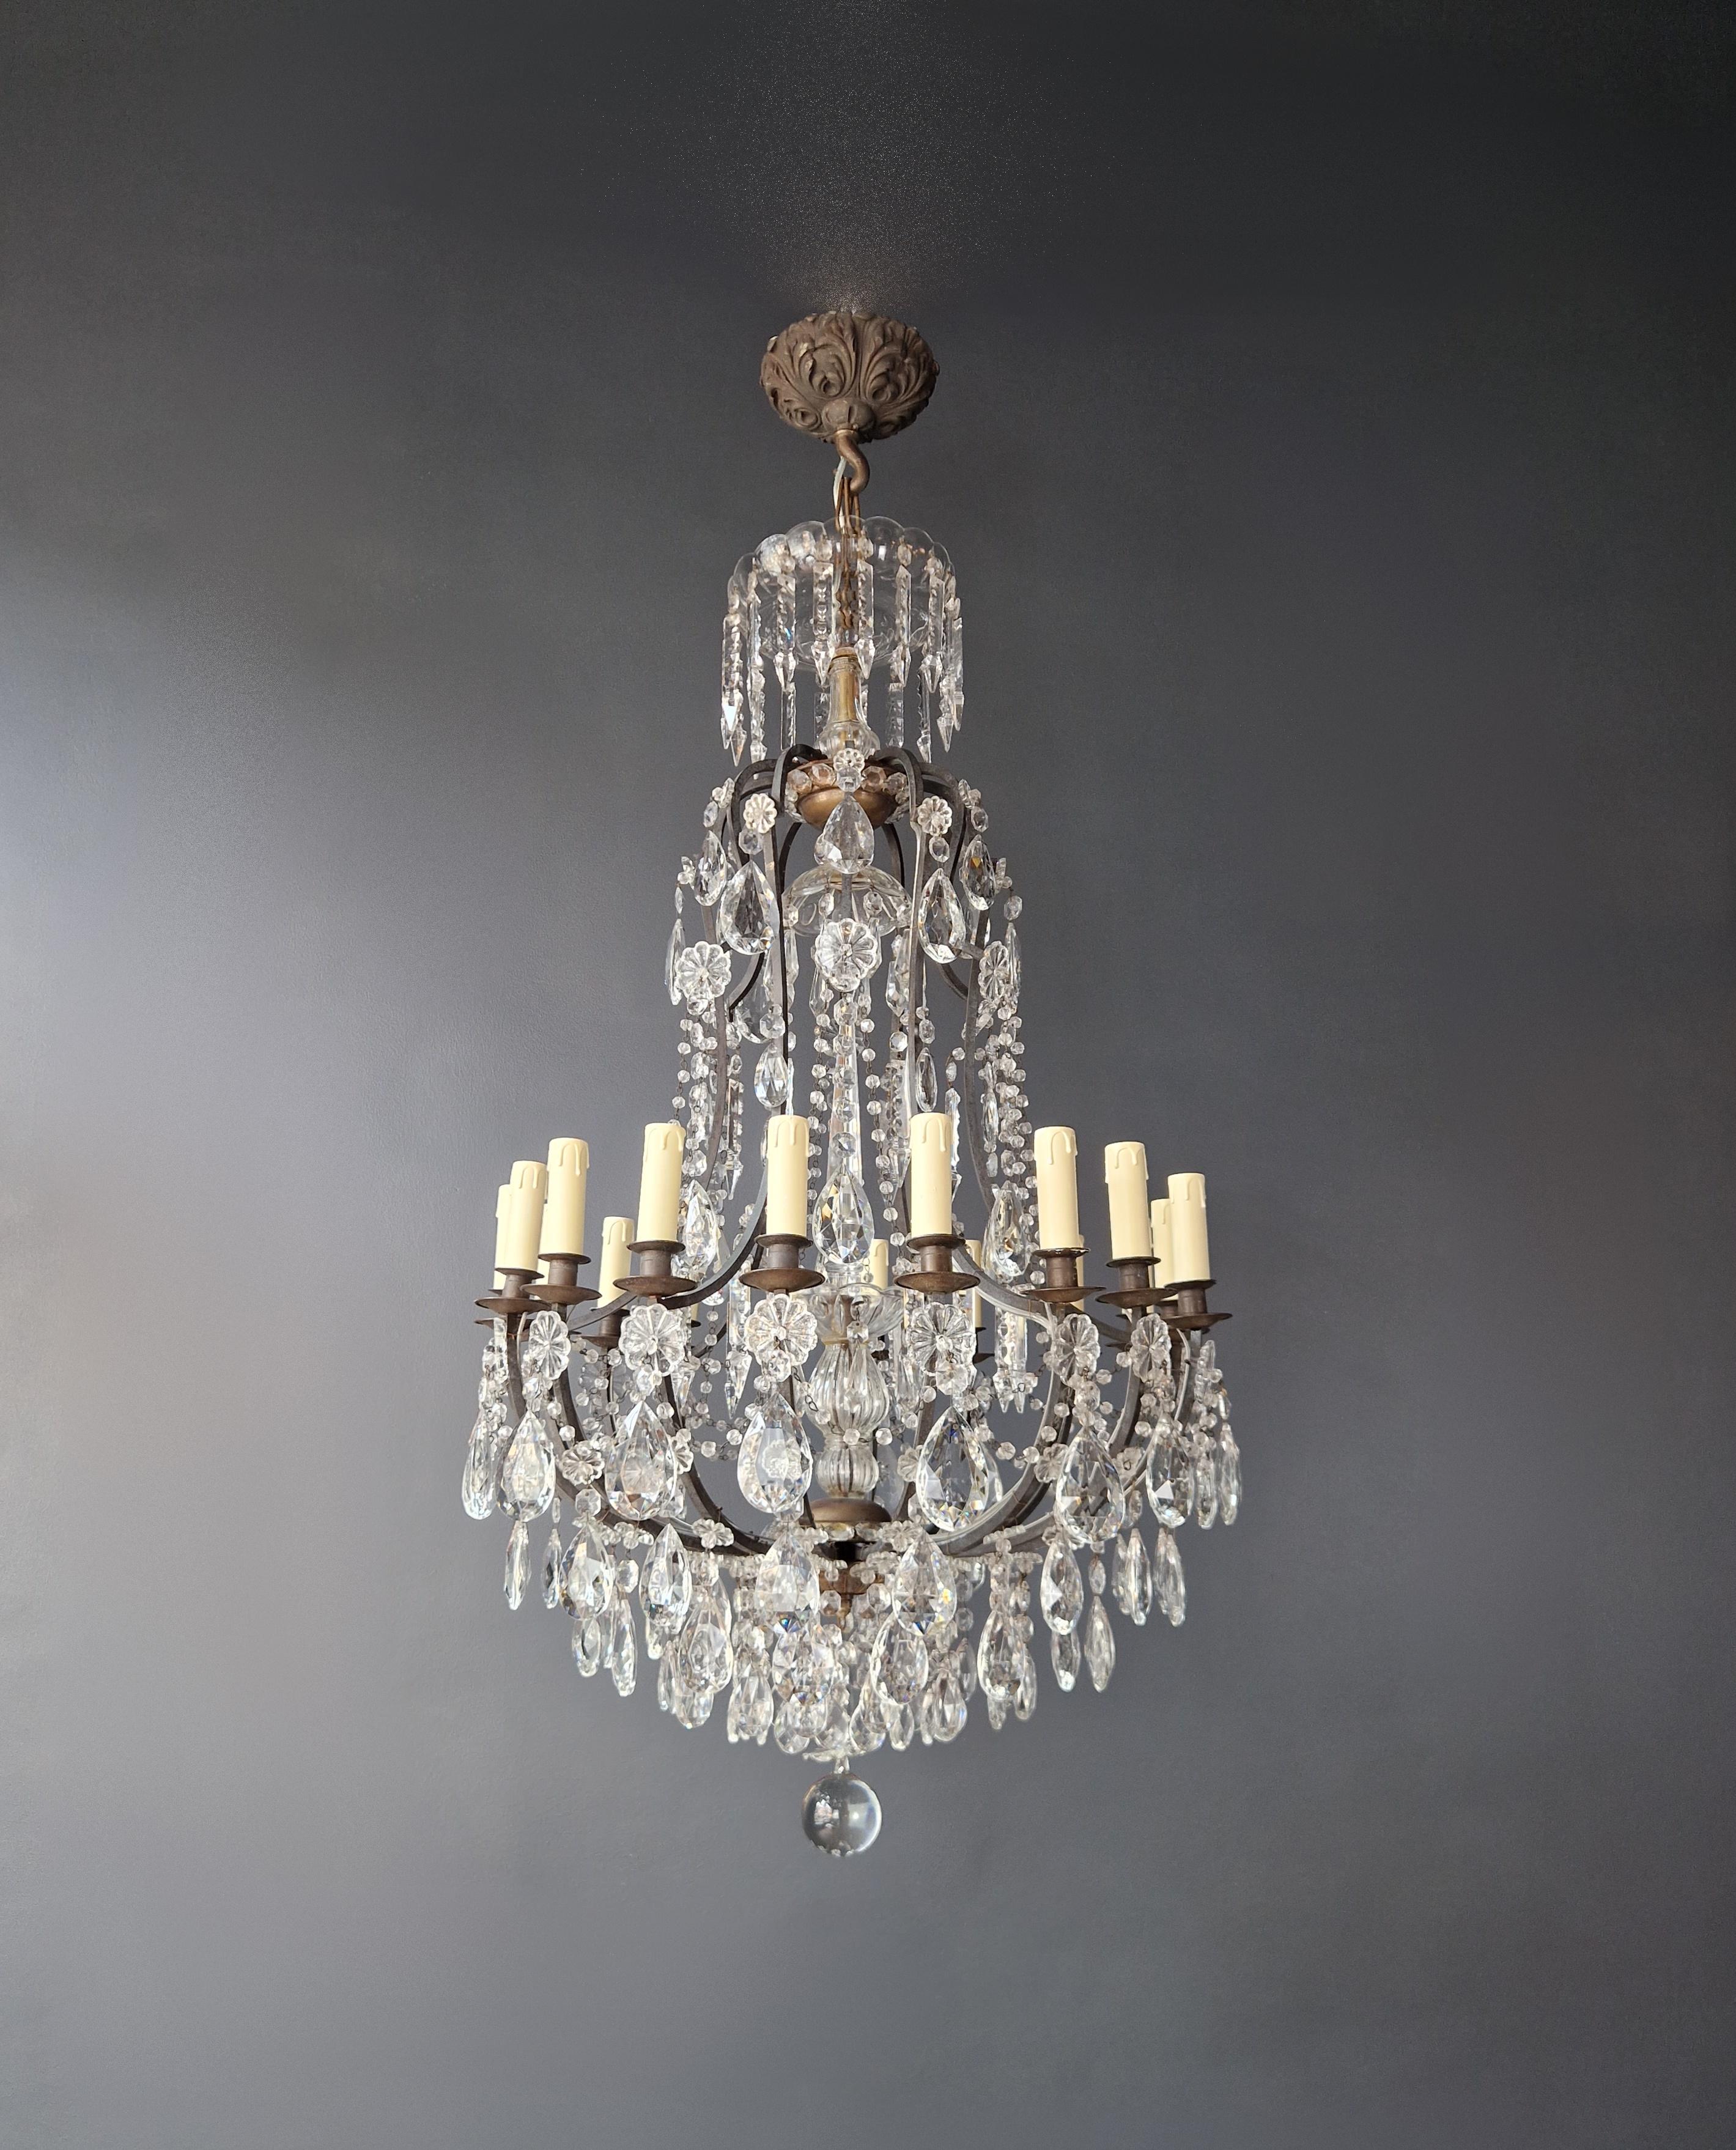 Antique French Crystal Chandelier Ceiling Lamp Lustre Art Nouveau Lamp For Sale 2